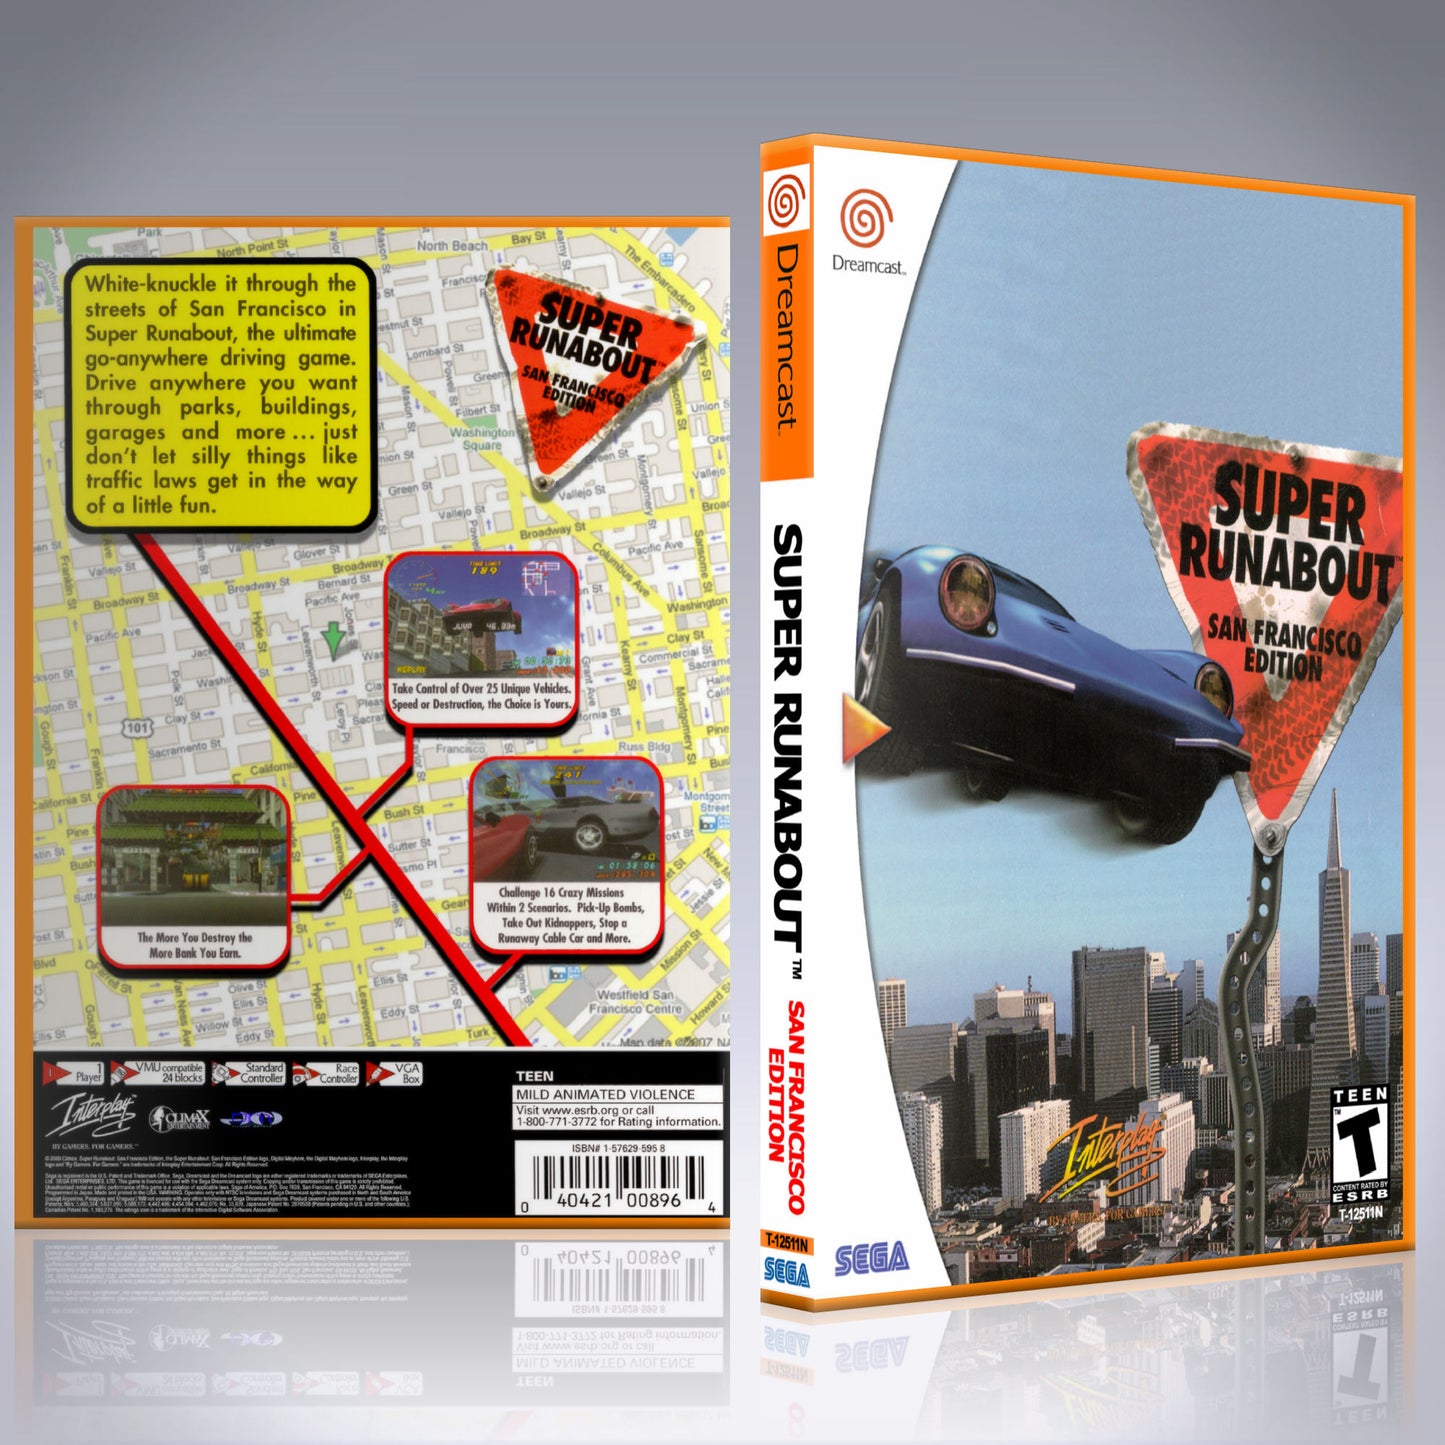 Dreamcast Custom Case - NO GAME - Super Runabout - San Francisco Edition